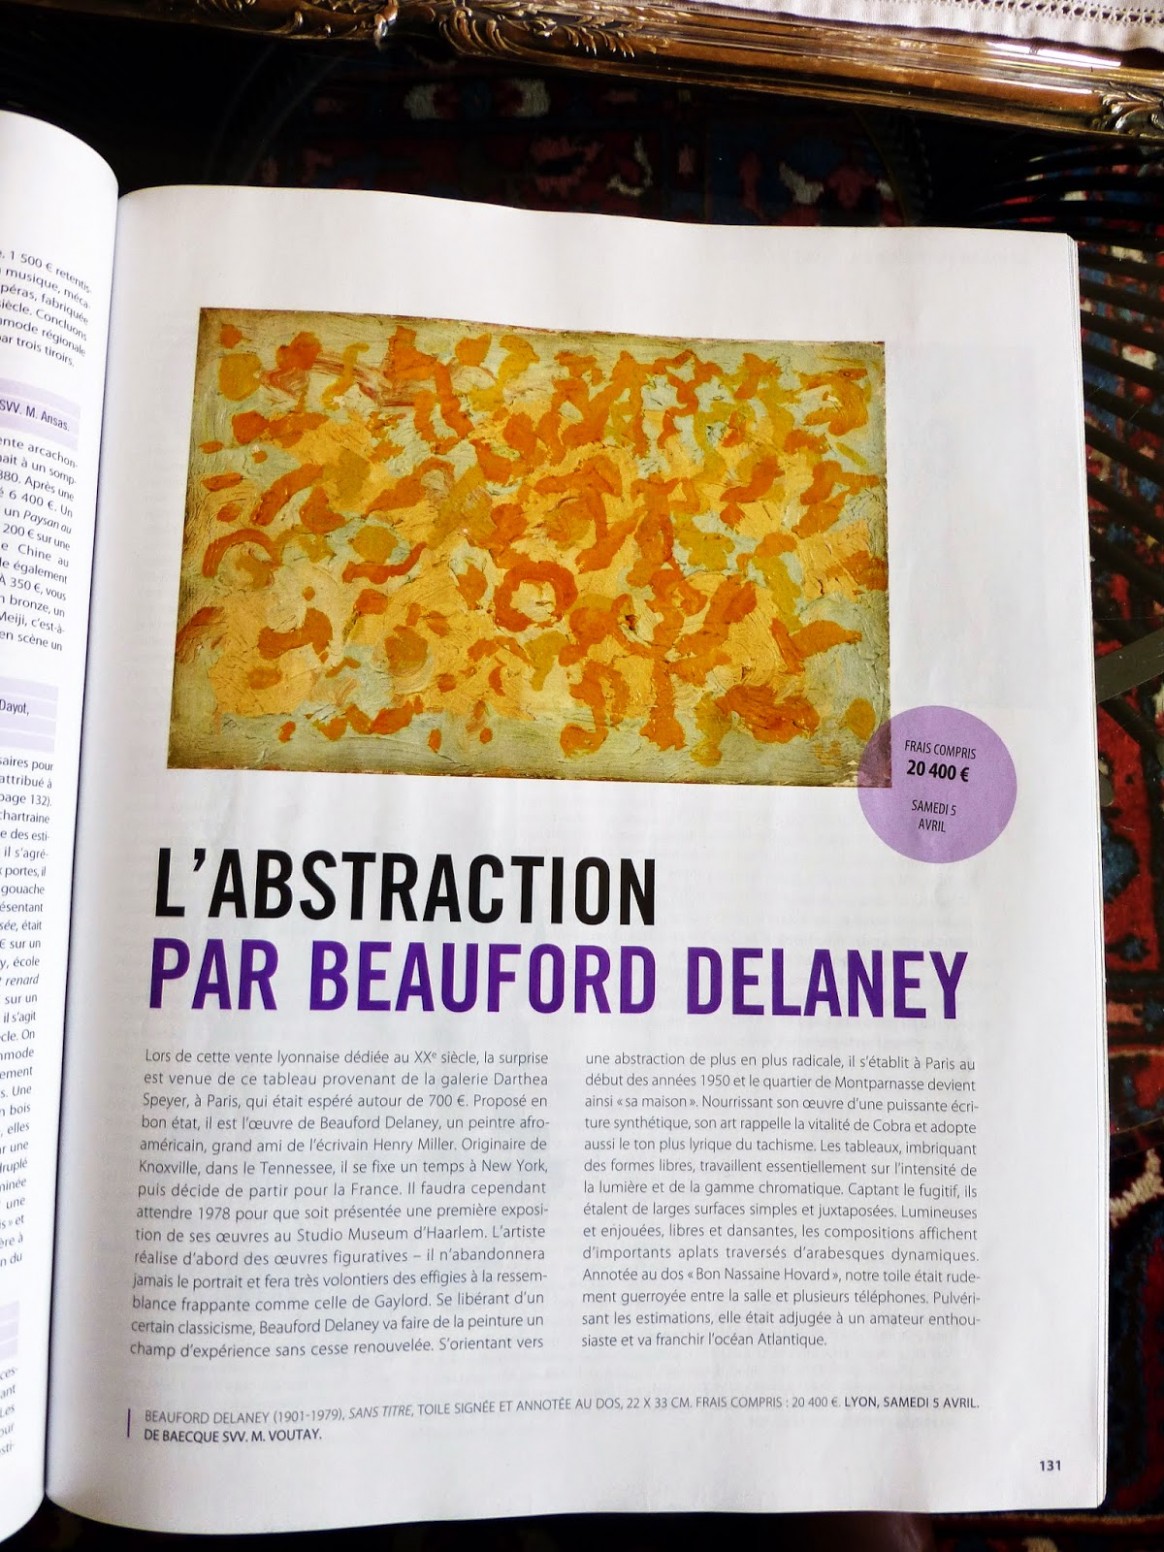 Les Amis De Beauford Delaney: May 7 Acrylic Pour Painting Cles